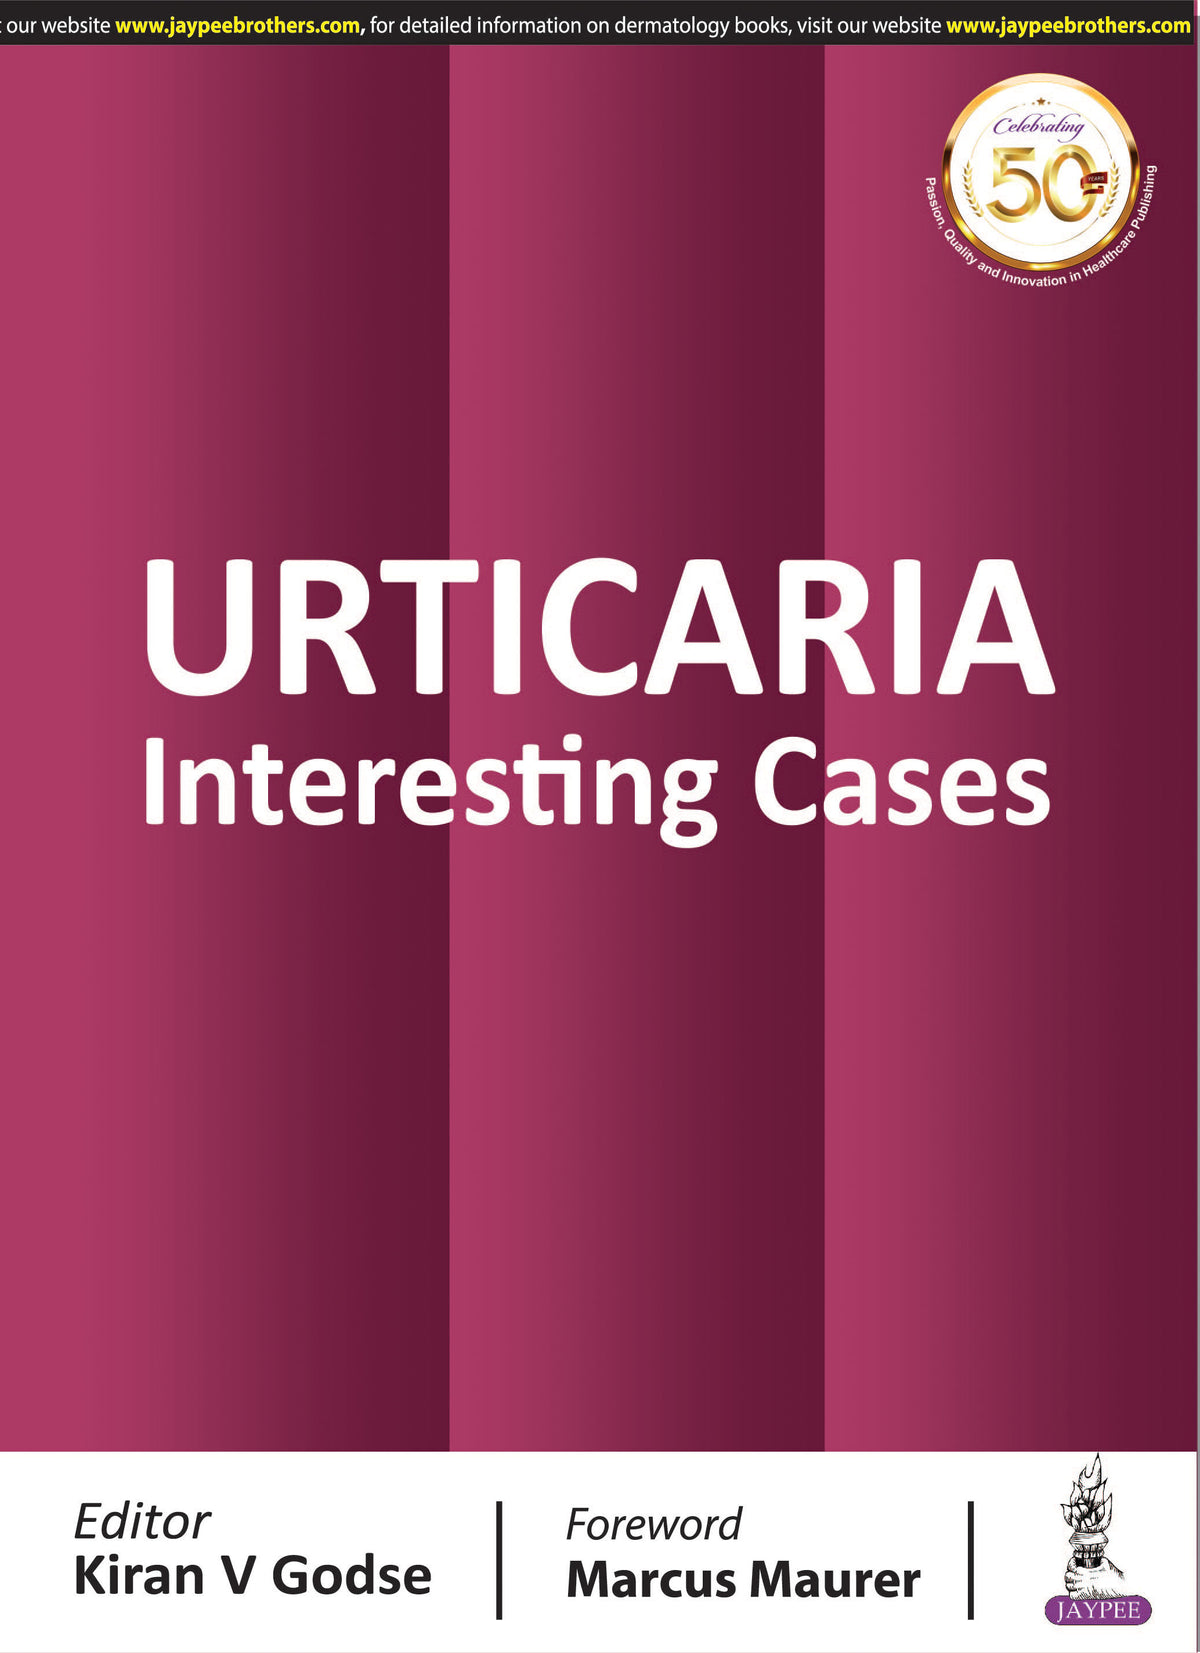 URTICARIA: INTERESTING CASES
,1/E,KIRAN V GODSE